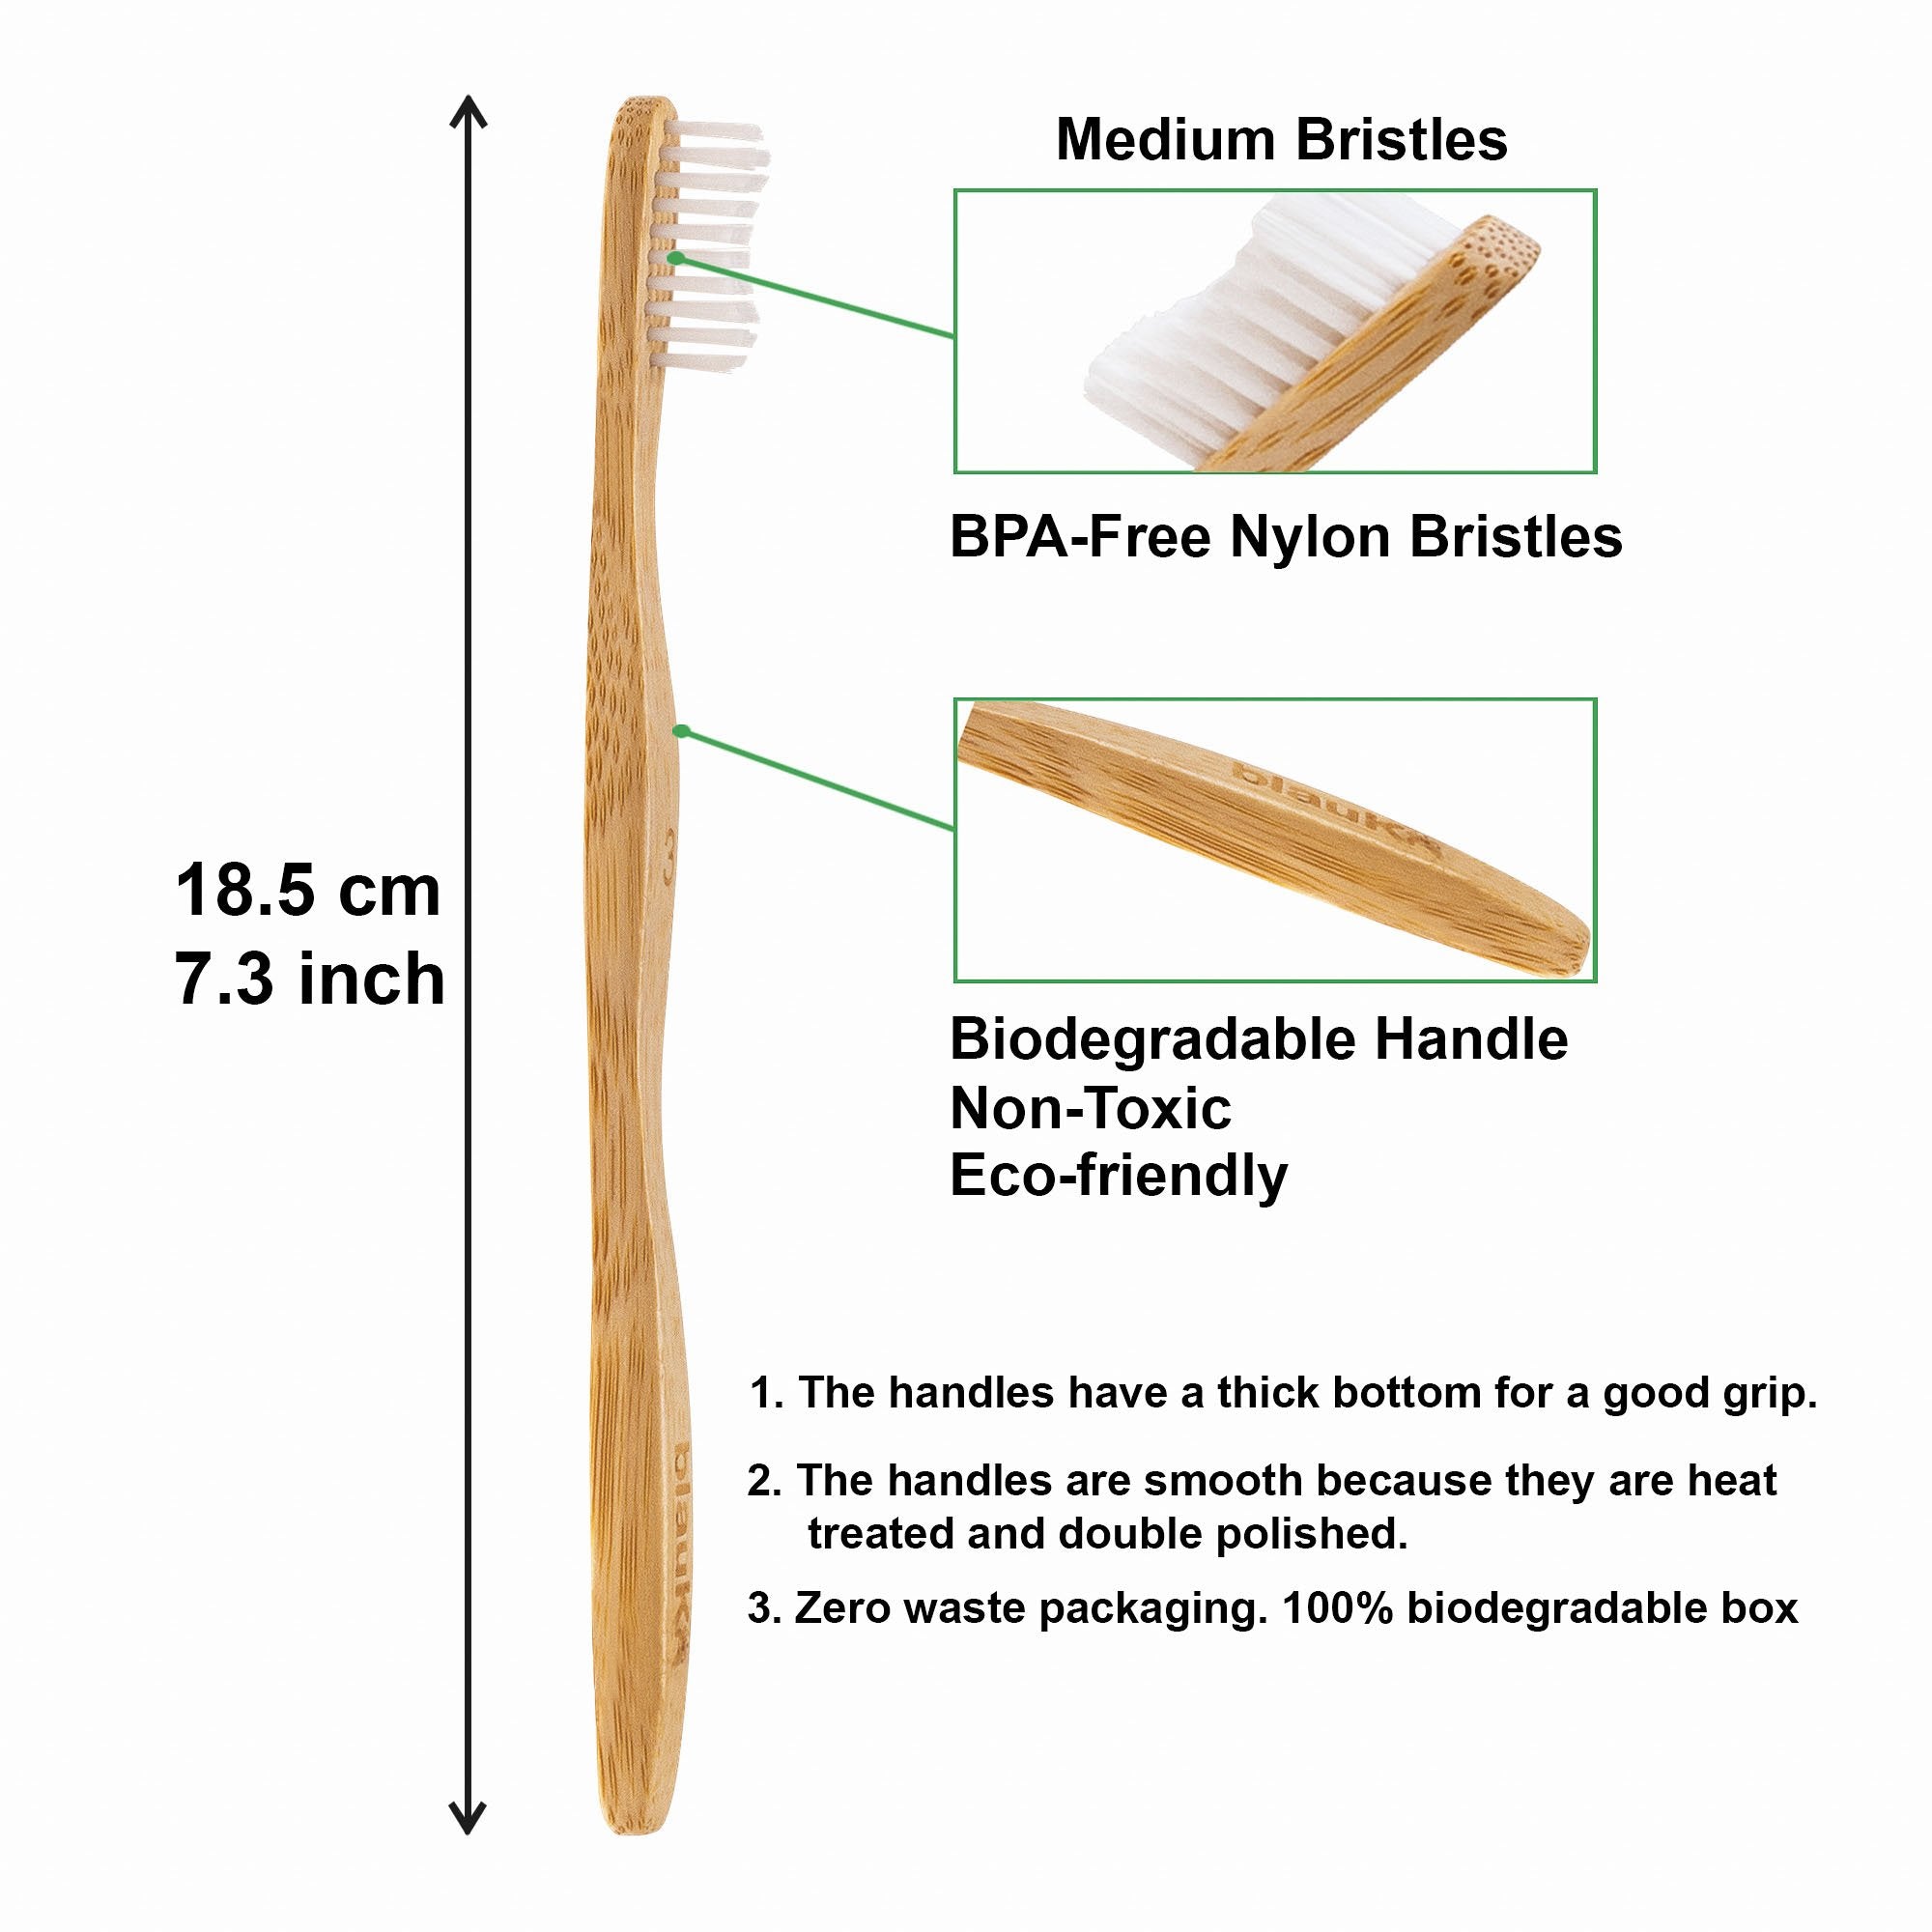 Bamboo Toothbrush Medium Bristles - Biodegradable Toothbrushes - Wooden Toothbrushes - Recyclable Toothbrushes - Bamboo Toothbrush Set 100-1410